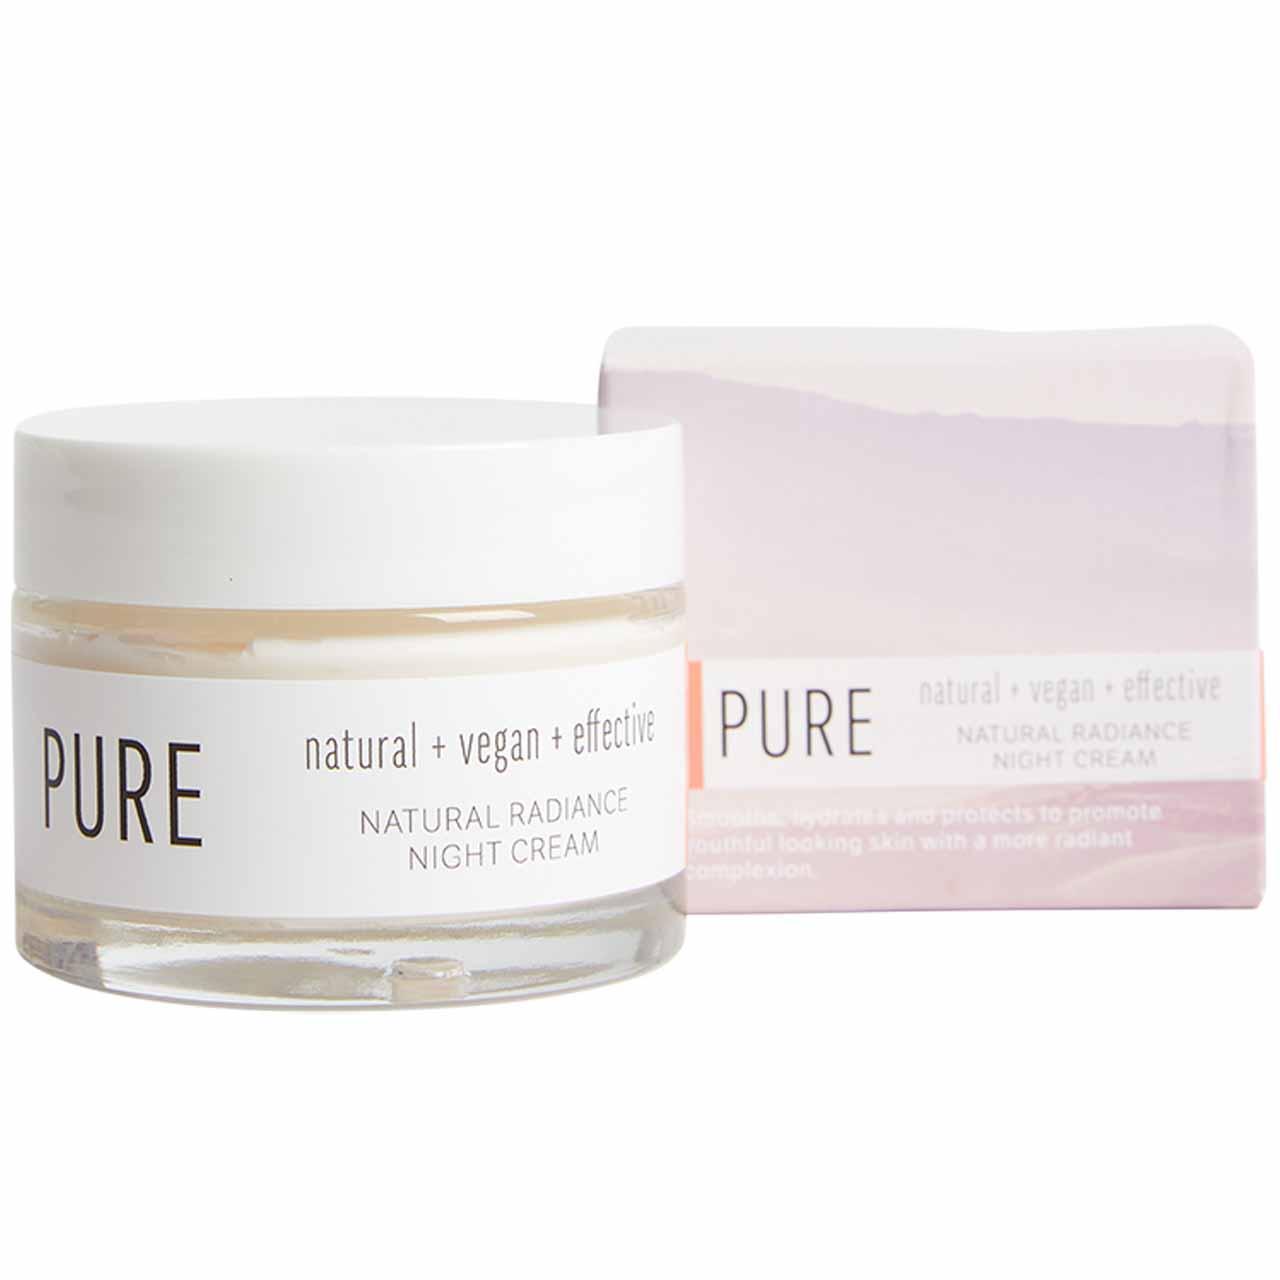 M&S Pure Natural Radiance Night Cream